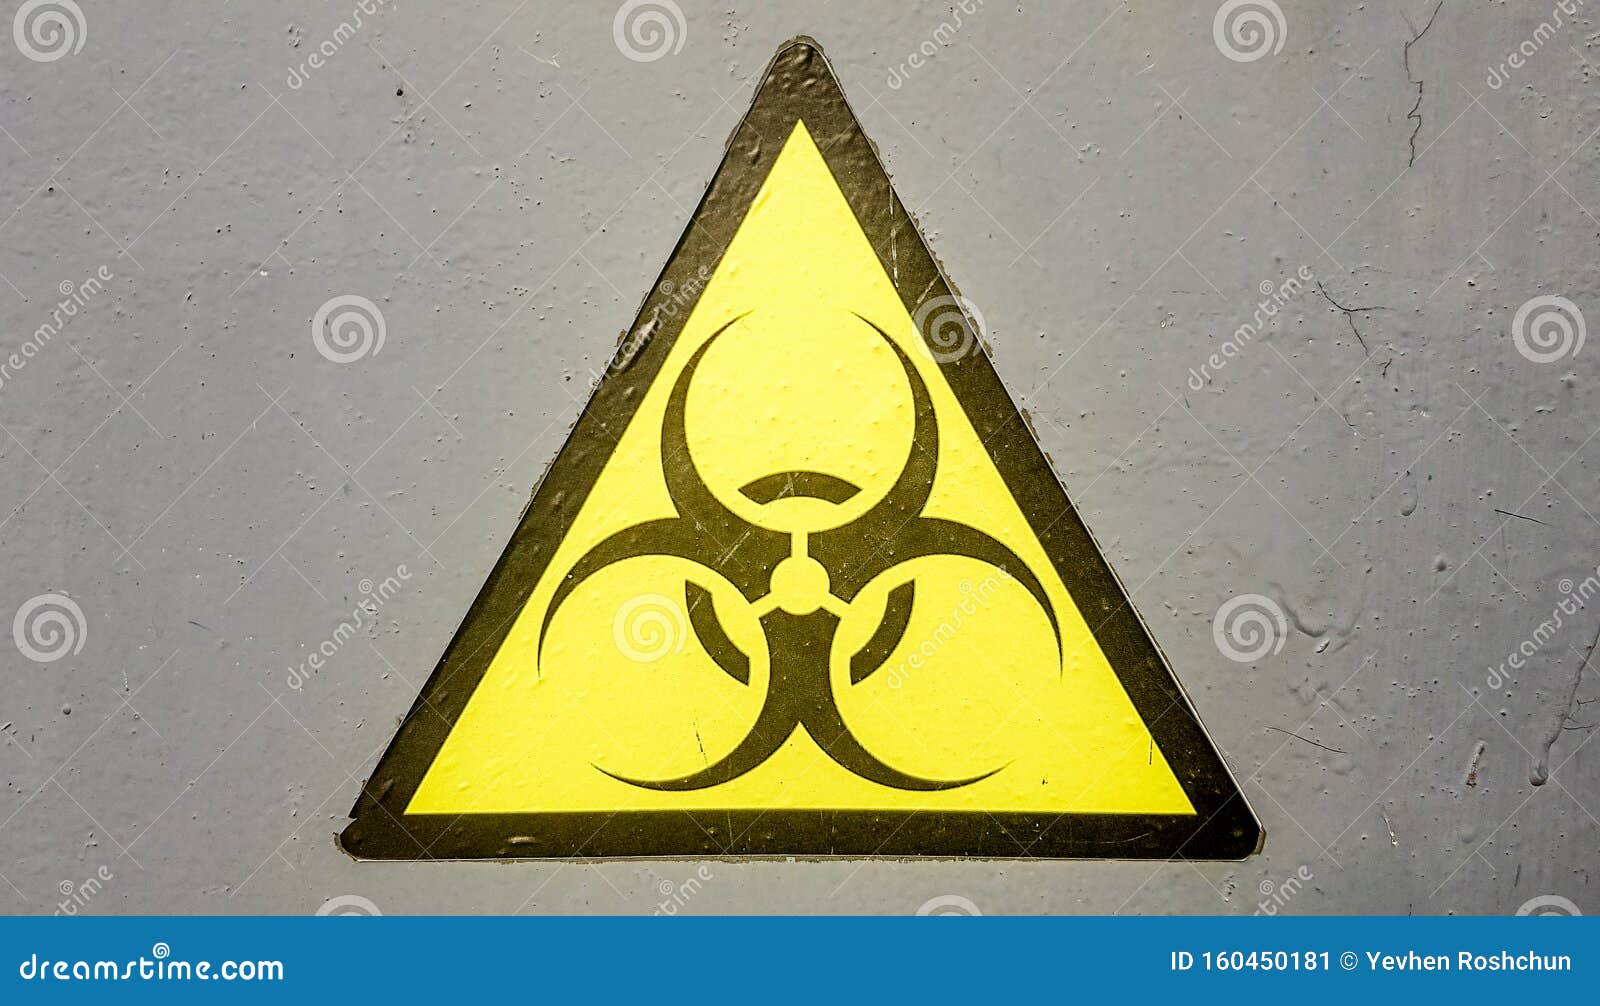 Biohazard Sign Symbol Biohazard Warning, Black Yellow Triangle Signage ...